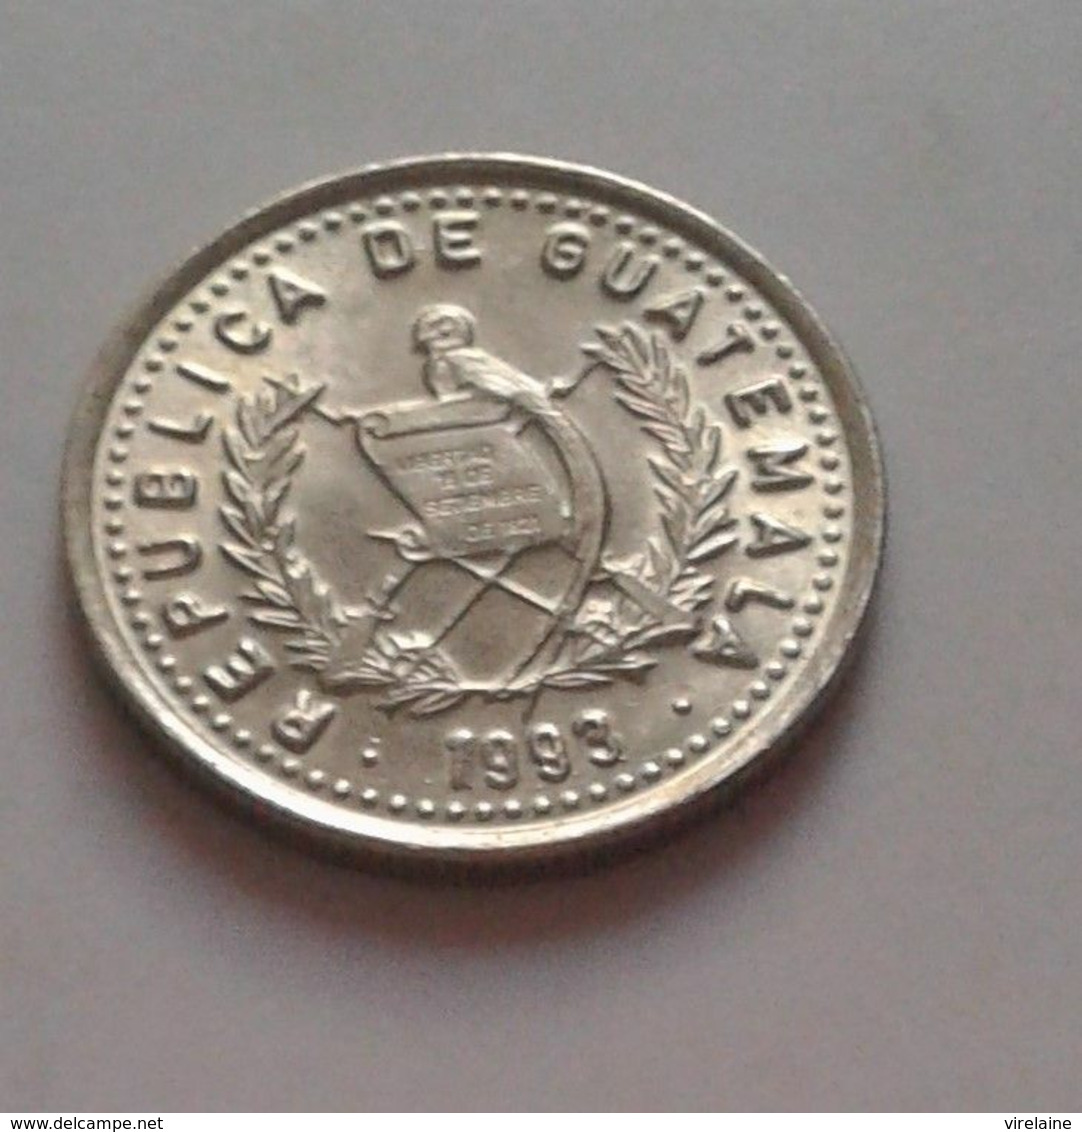 GUATEMALA 5 CENTAVOS 1993 (B17 40)F - Guatemala